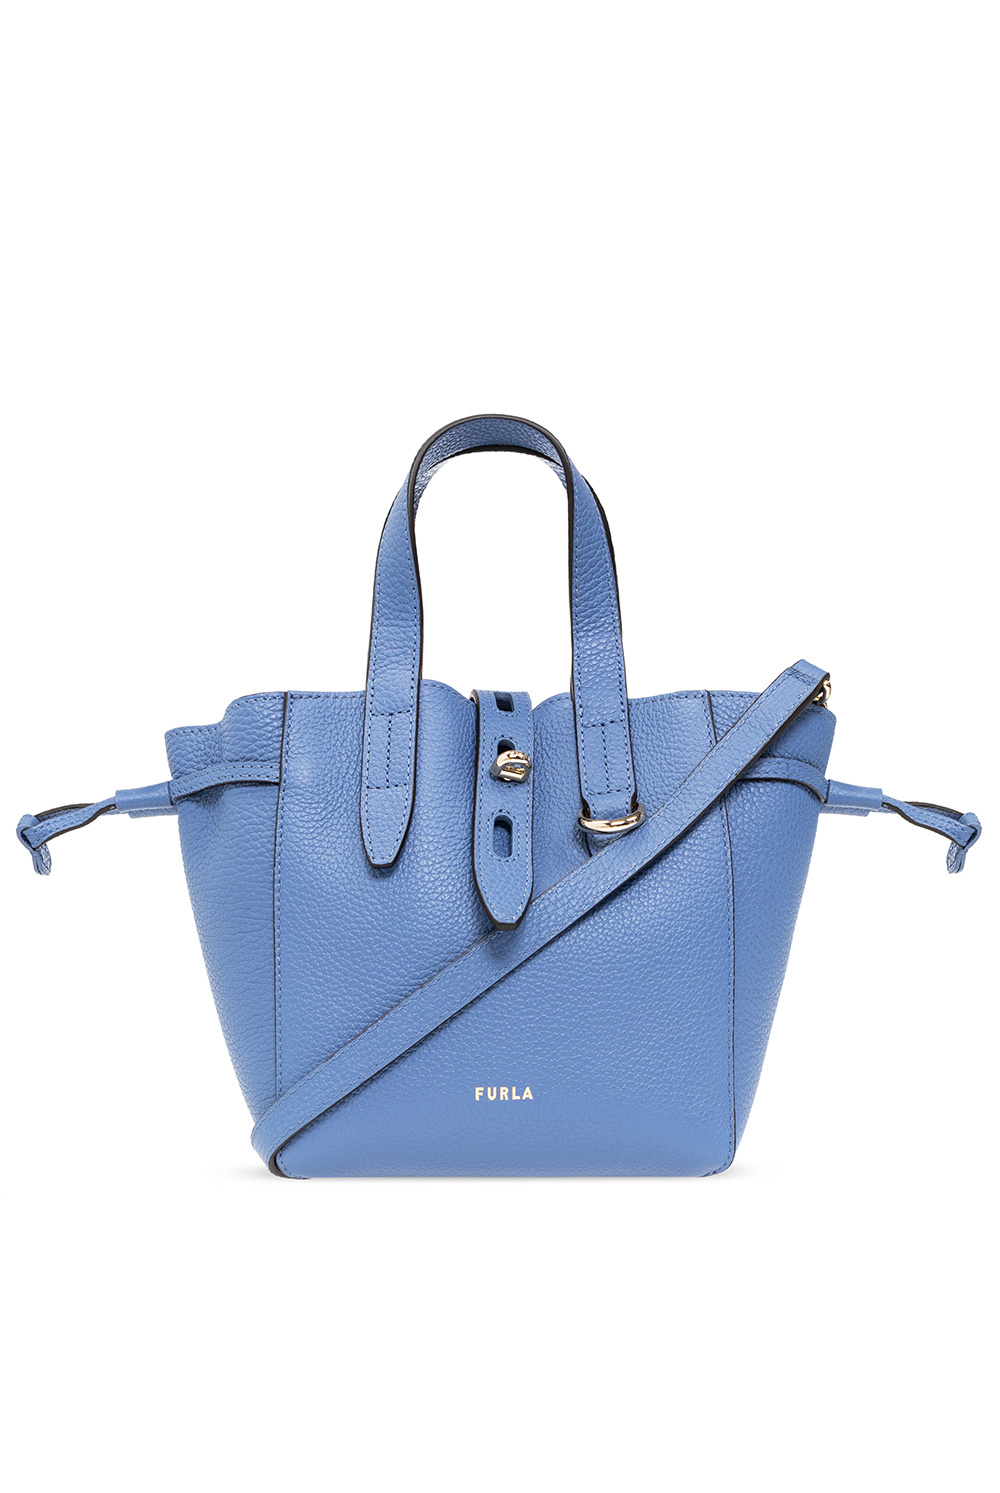 FURLA: net bag in grained leather - Gnawed Blue  Furla mini bag  BASRFUAHSF000 online at